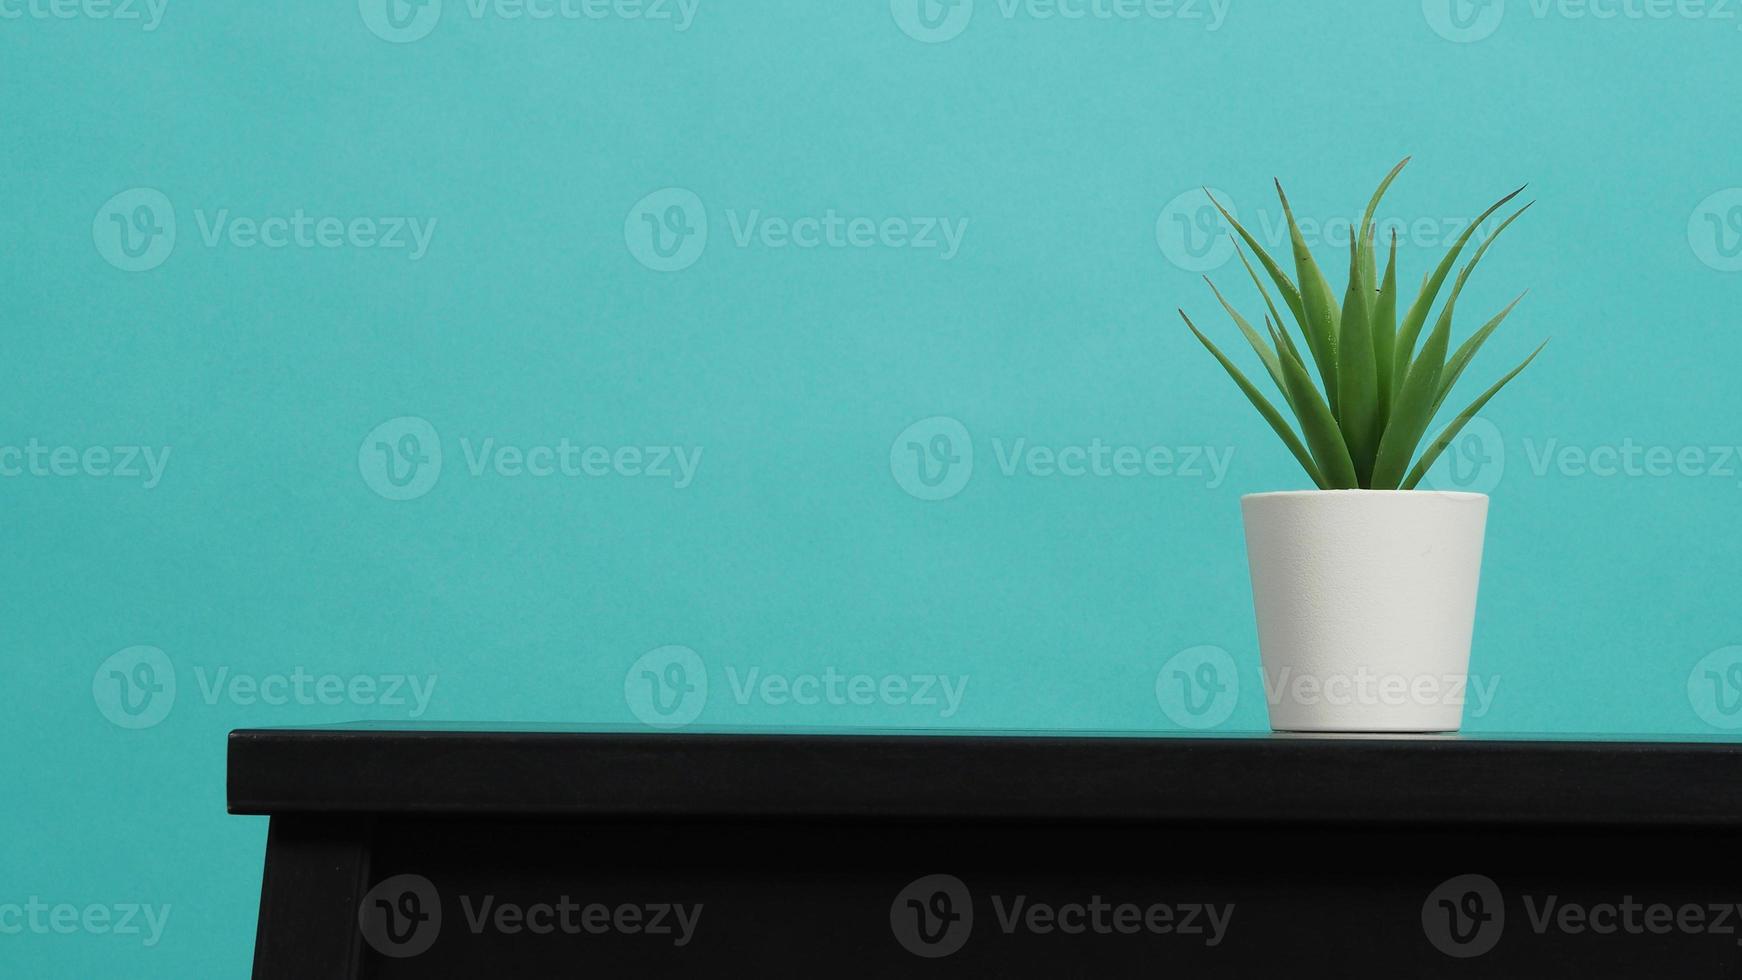 kunstmatige cactusplant op bureau met mintgroene achtergrond foto